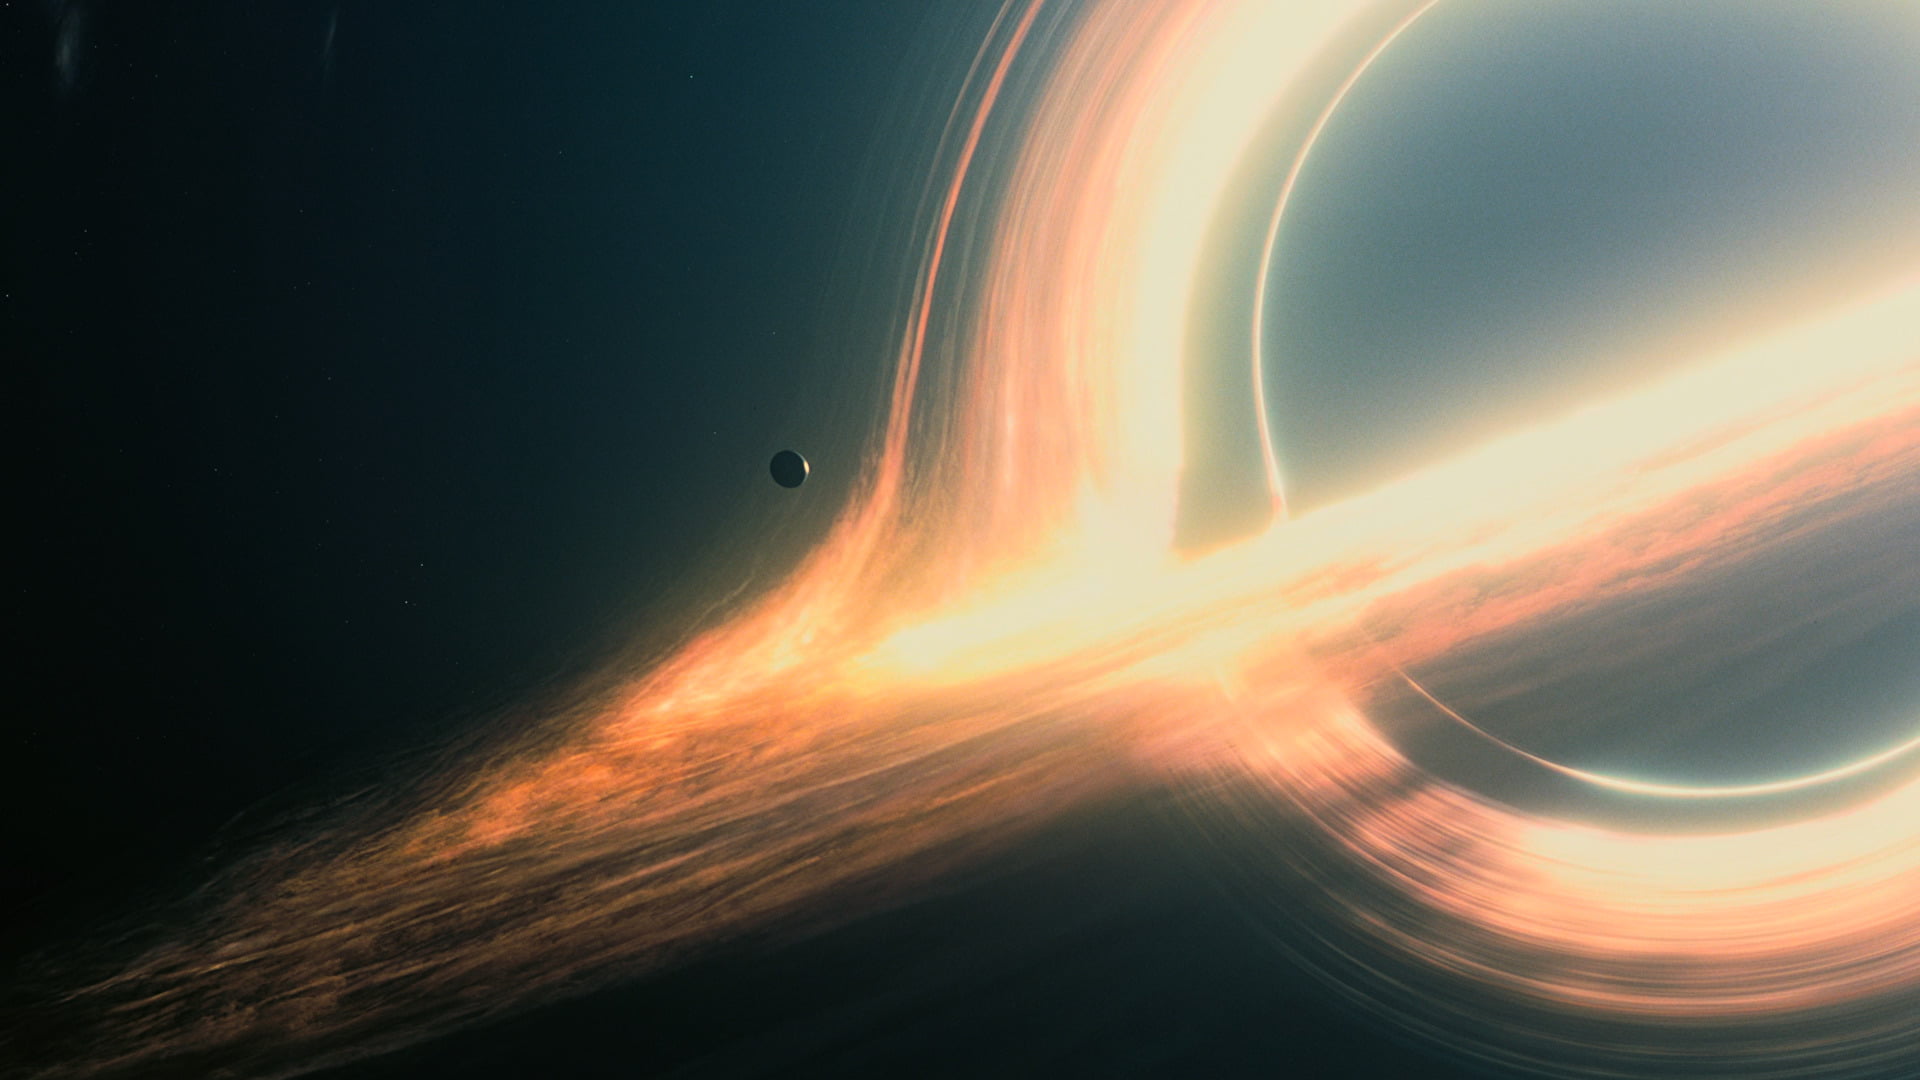 space, Interstellar (movie), planet, black holes, Gargantua